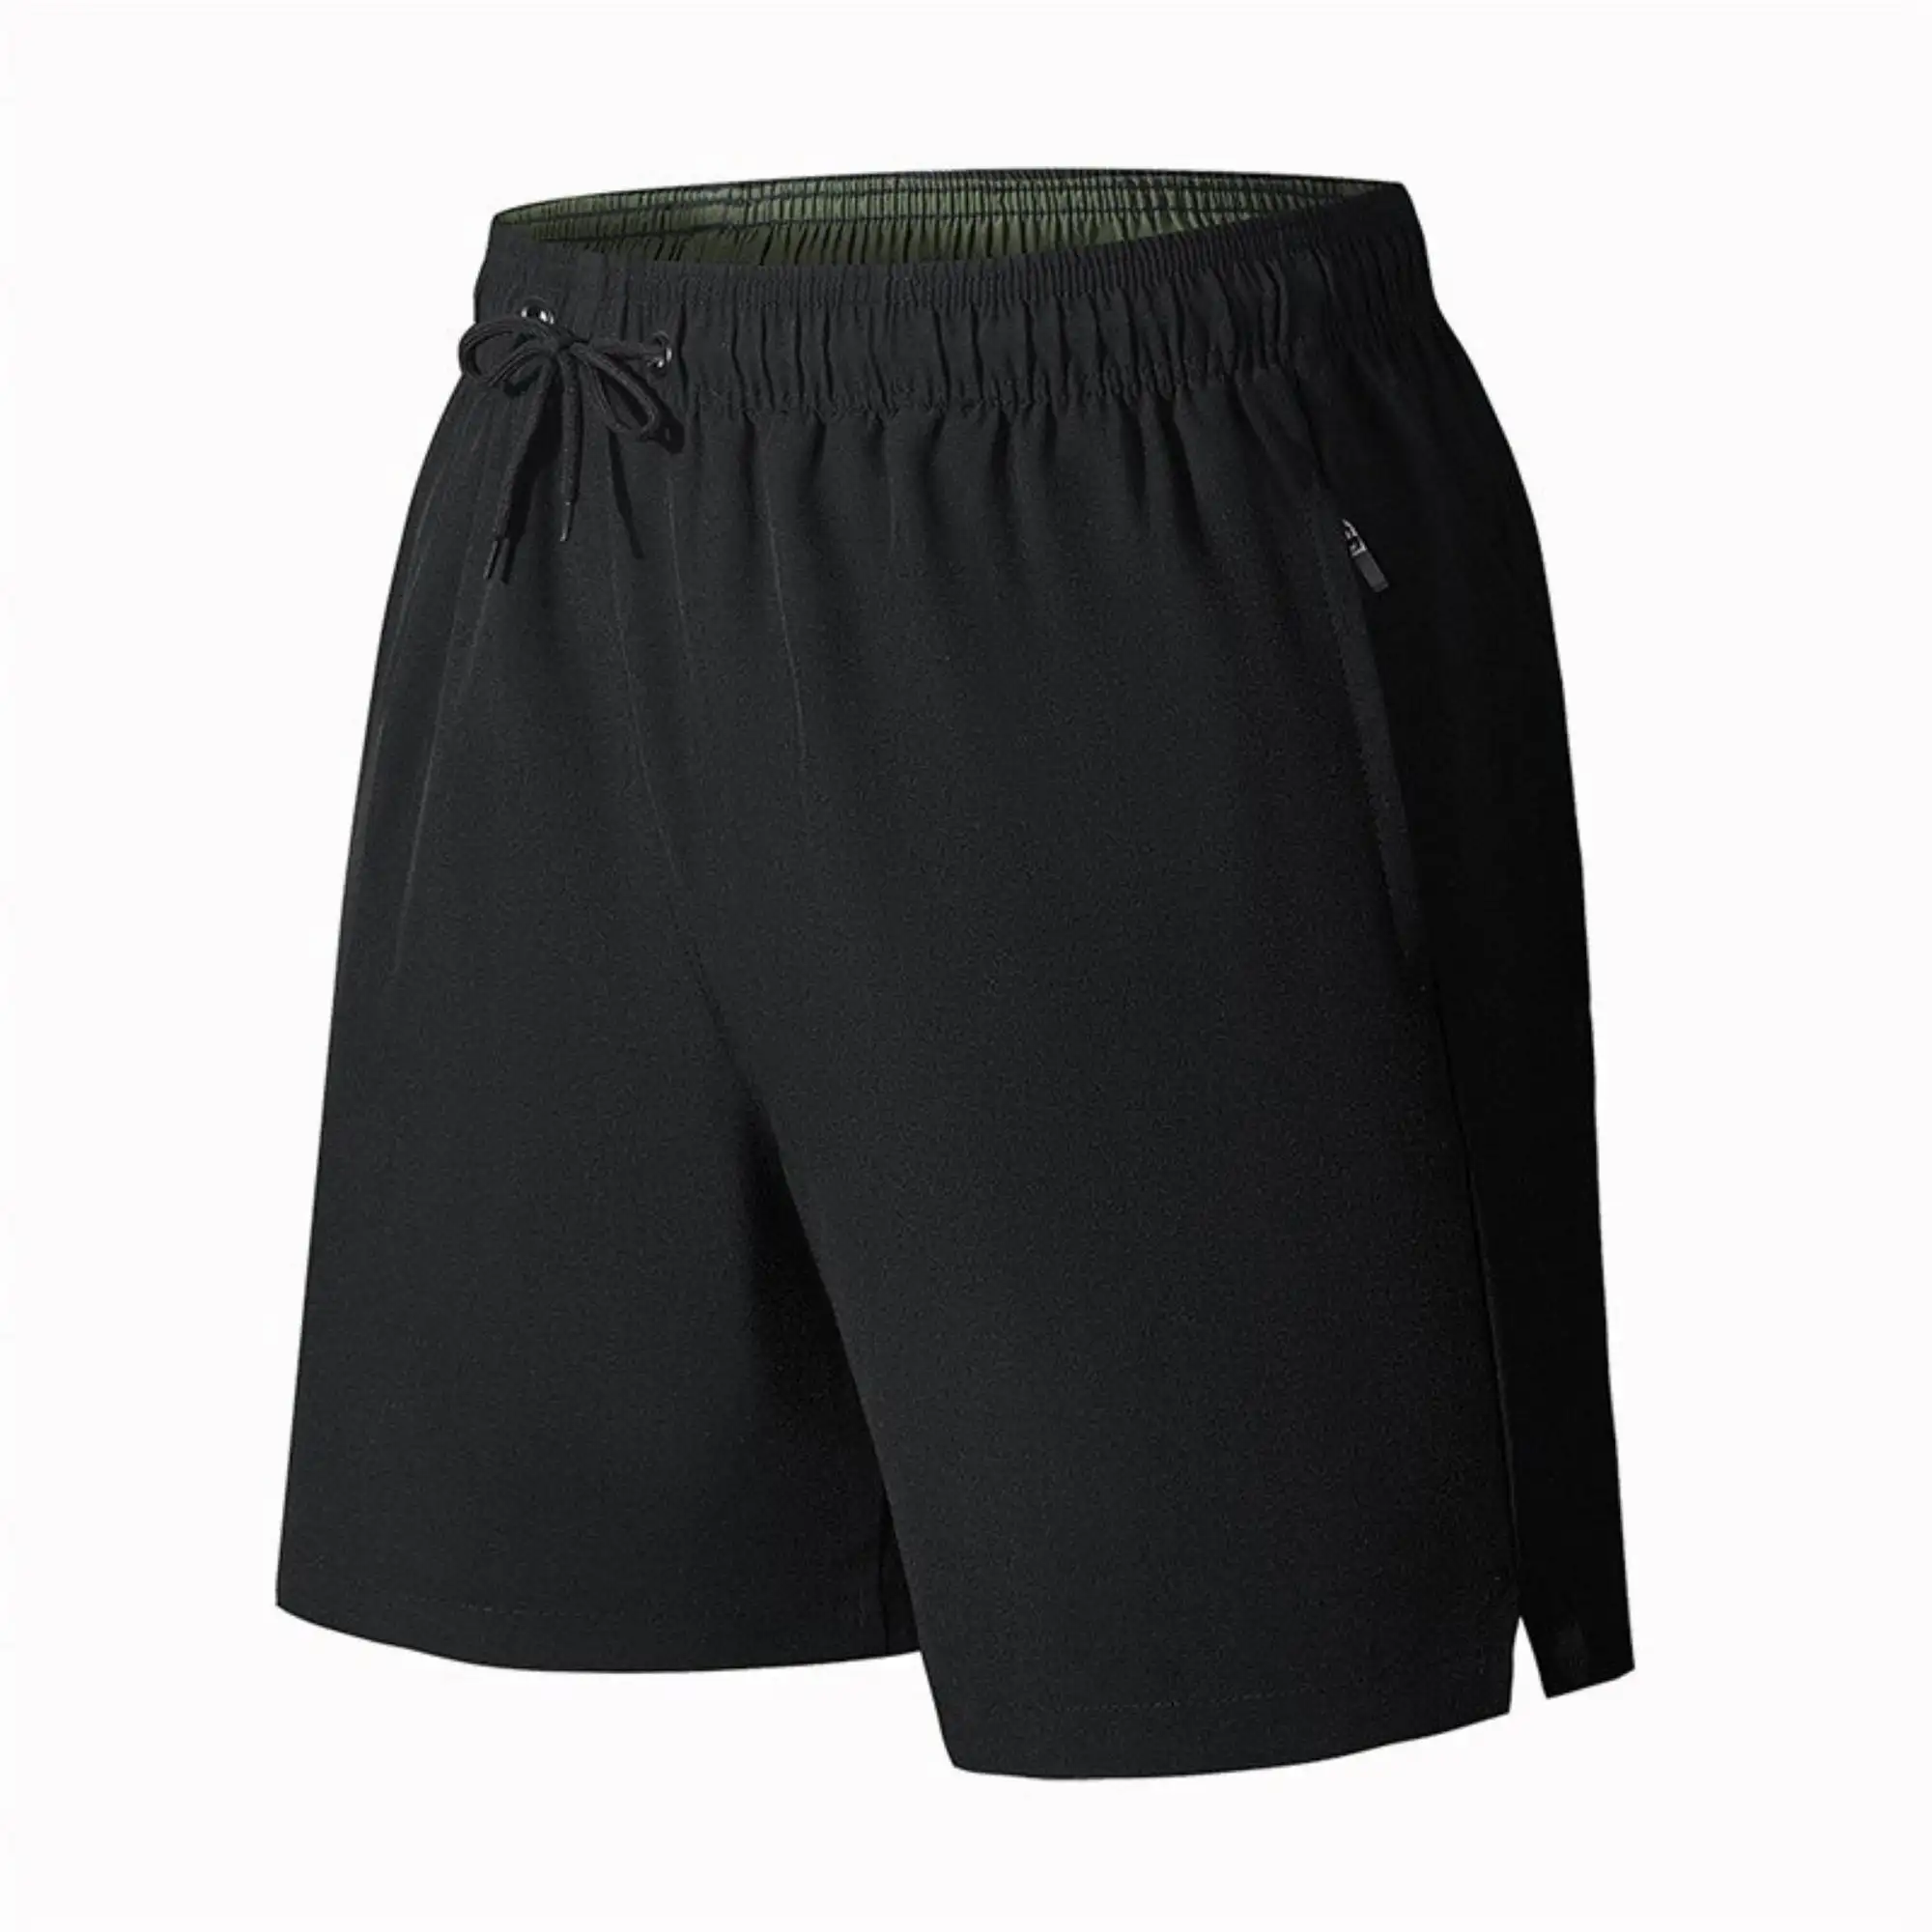 Men Gym Training Shorts Workout Sports Casual Clothing Fitness Running Shorts Male Short Pants Swim Trunks Beachwear Man Shorts